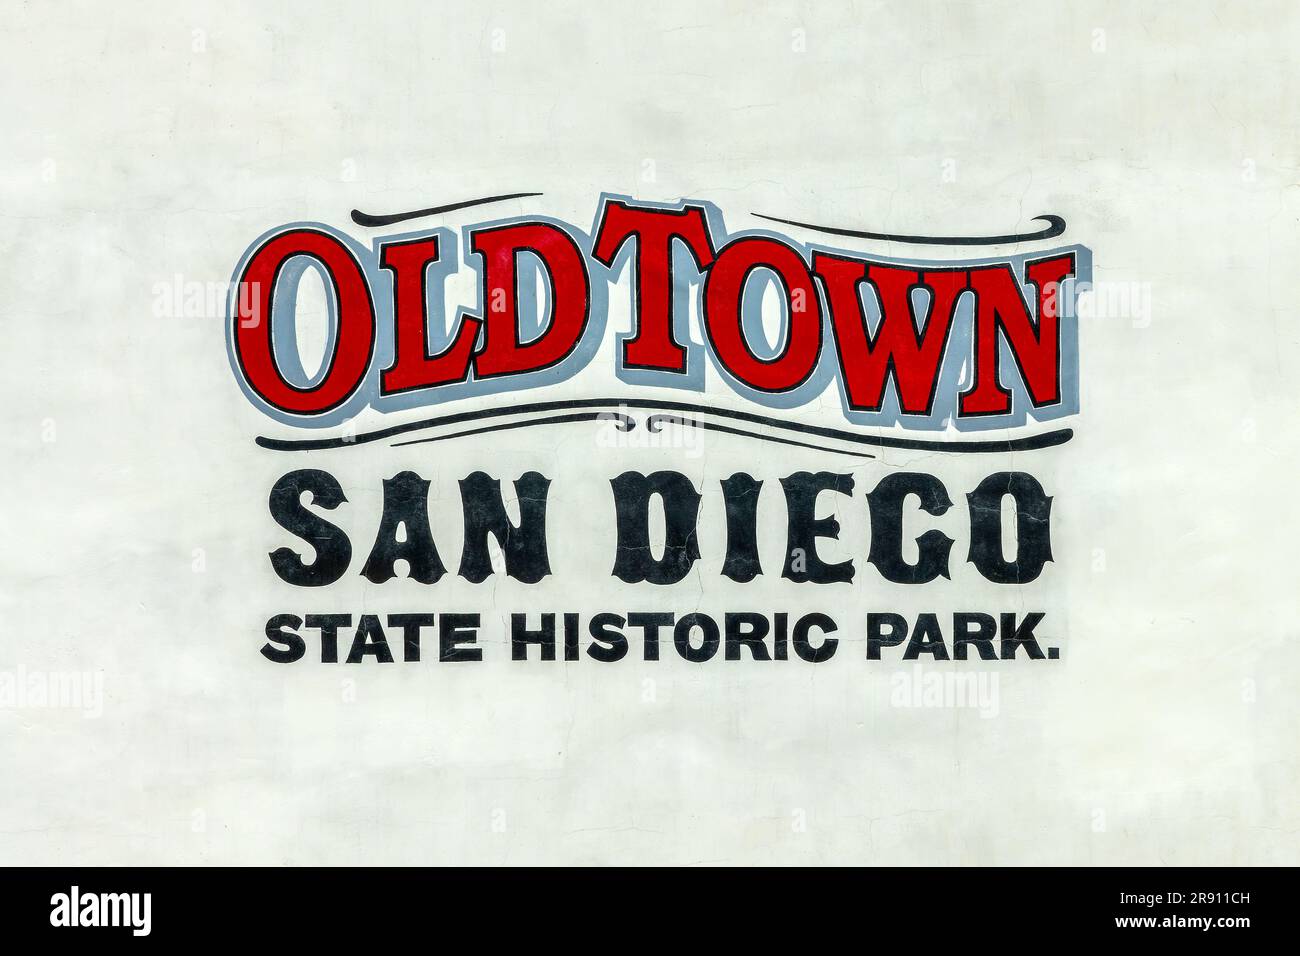 Old Town San Diego, State Historic Park, letrero en una pared blanca, California Foto de stock